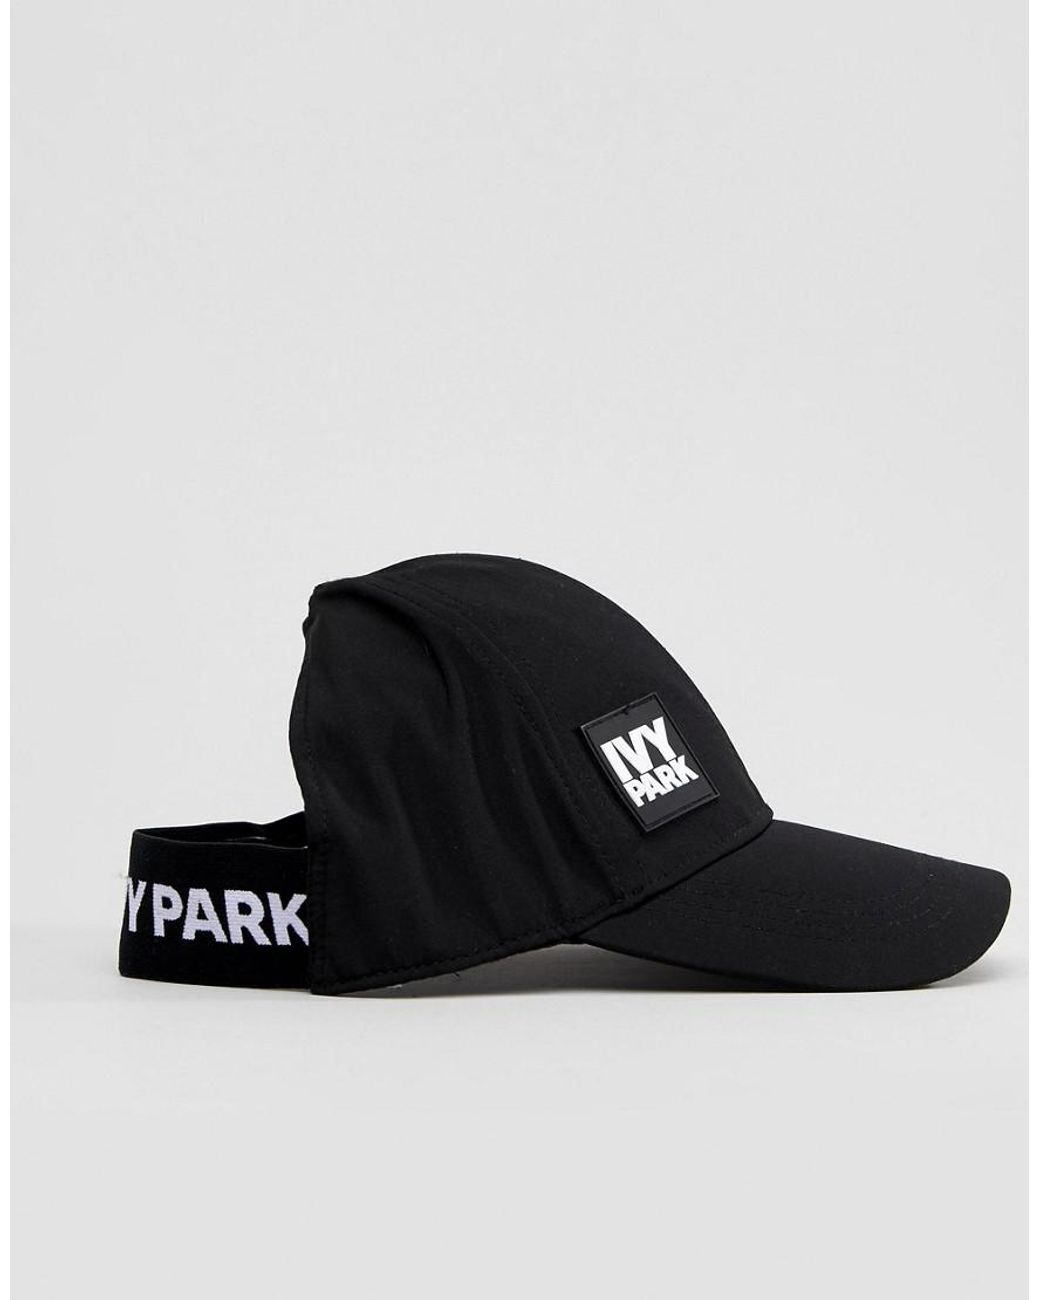 Ivy Park Backless Cap in Black | Lyst Australia